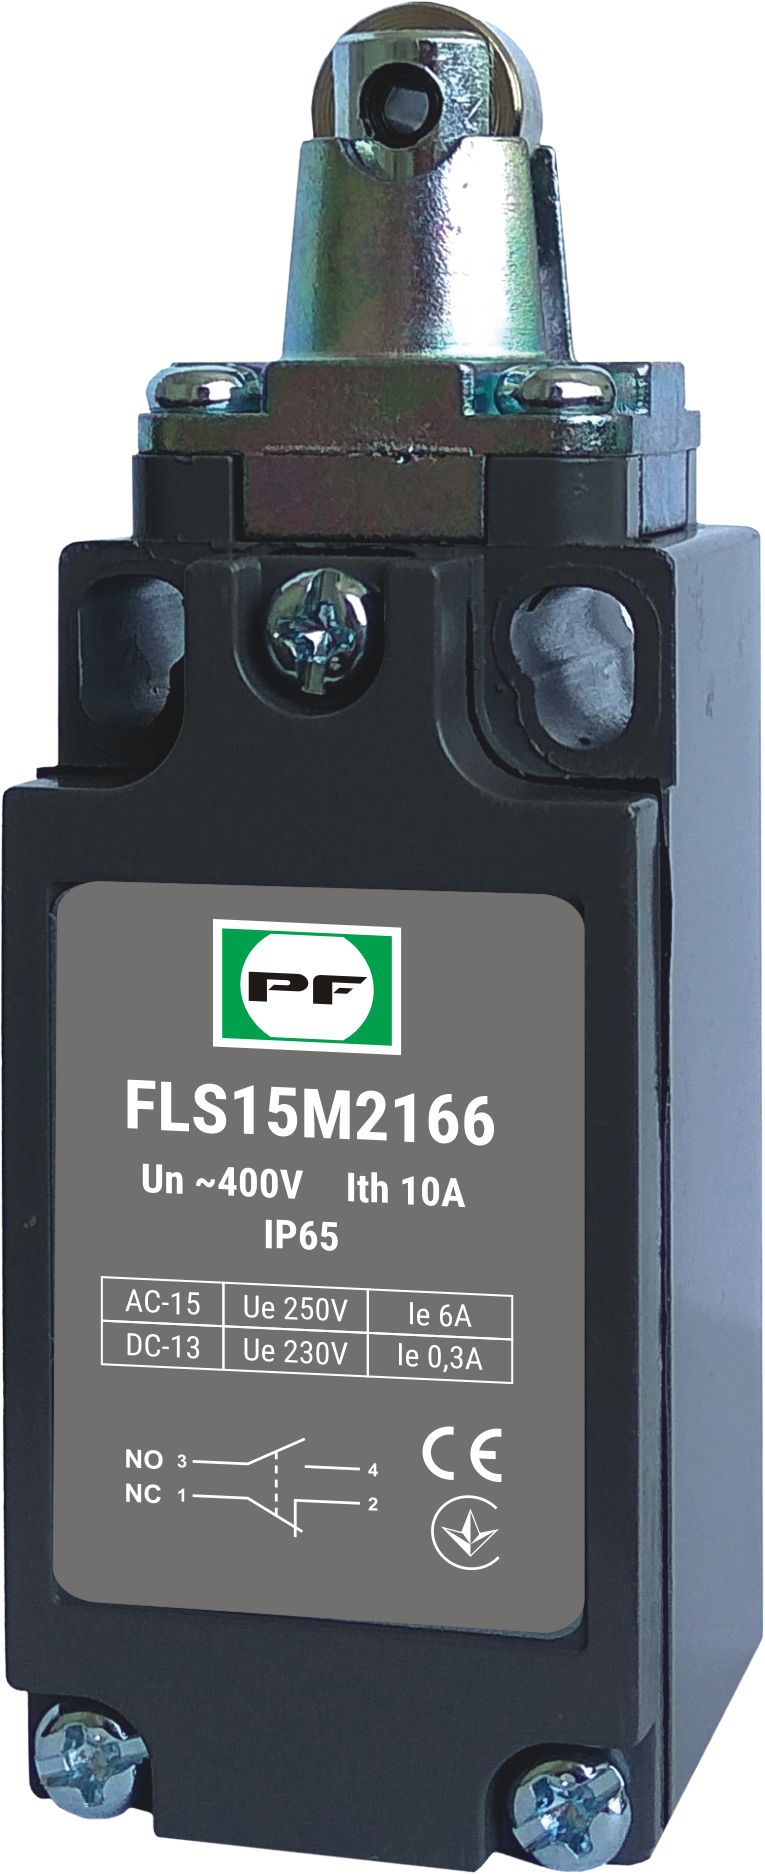 Limit switch FLS15M2166